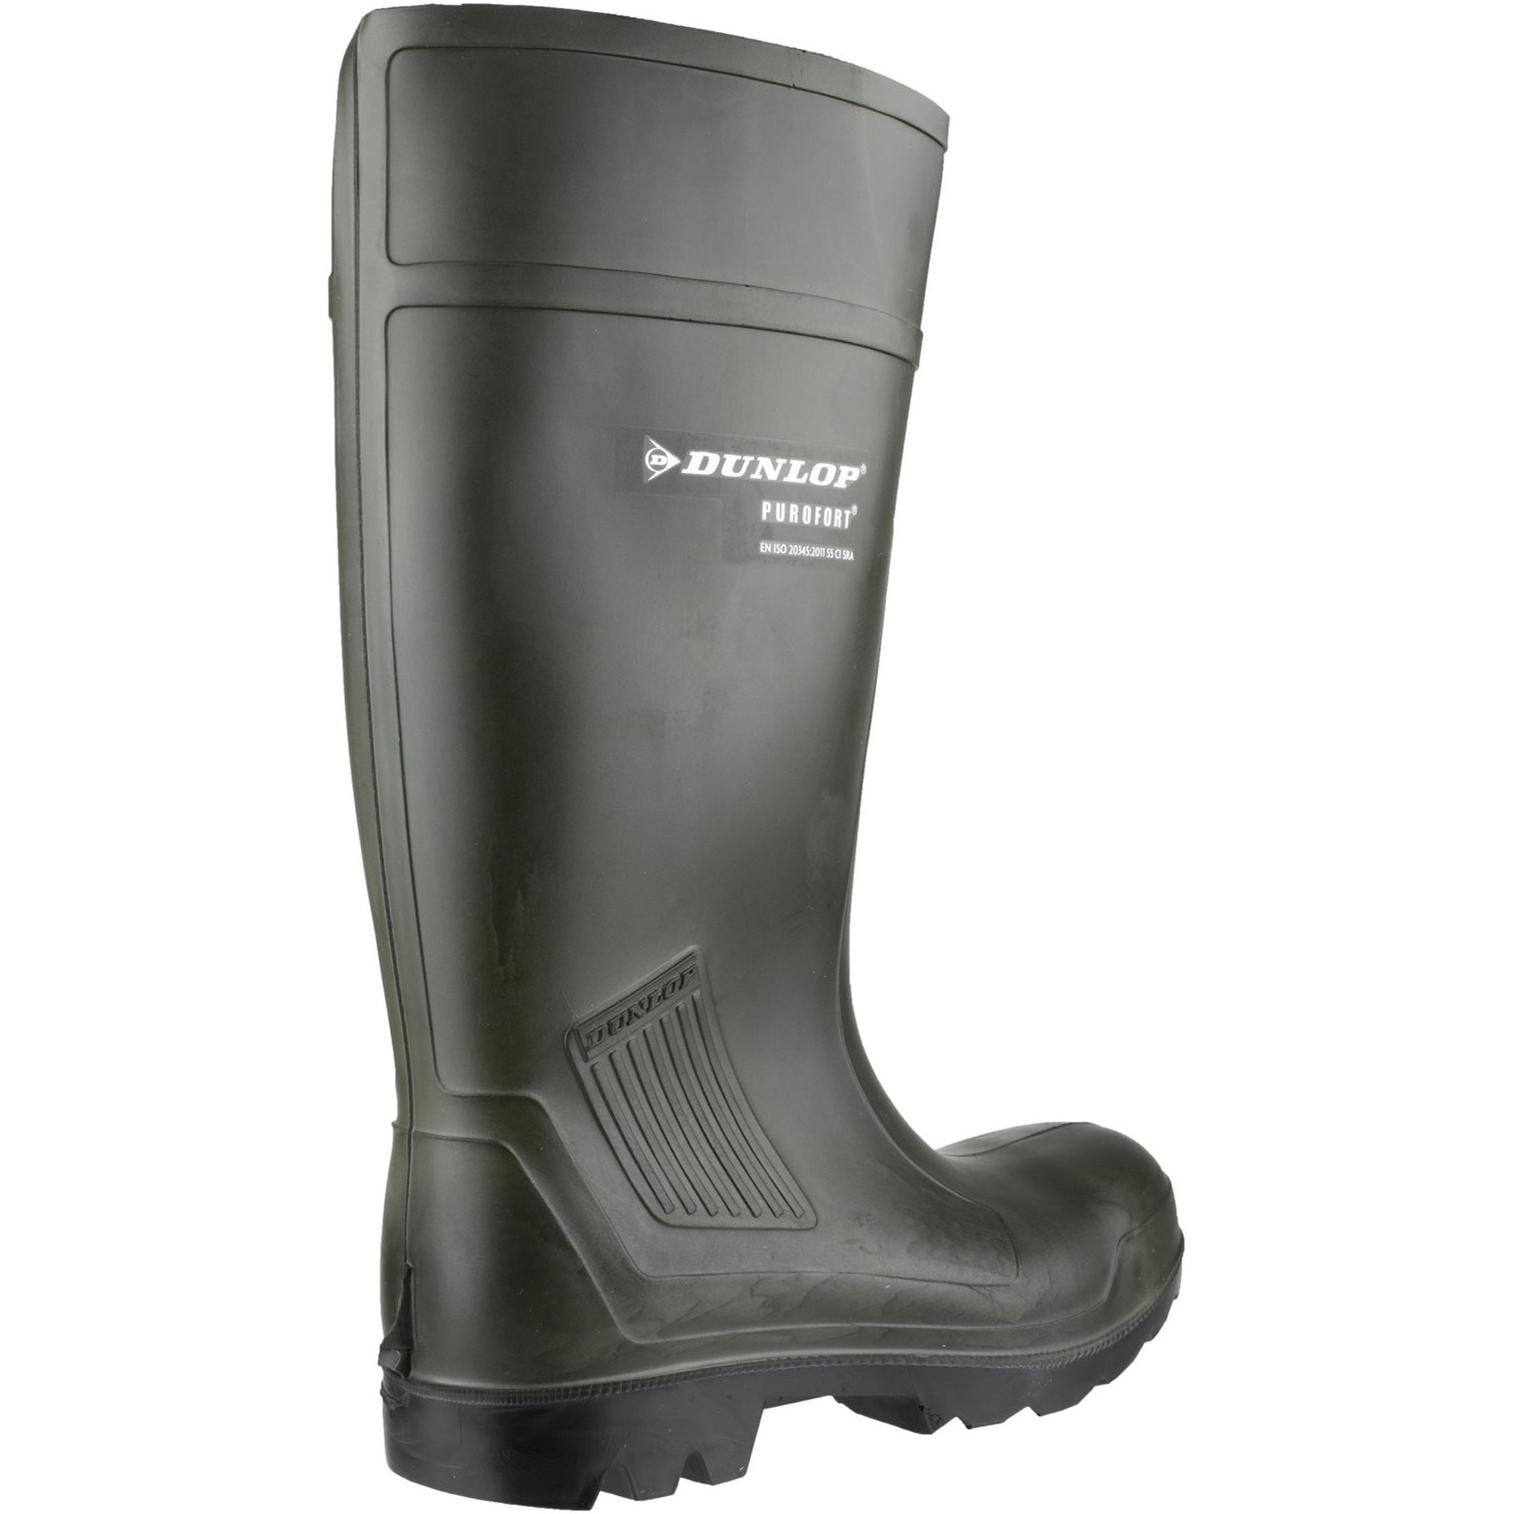 Dunlop Purofort��Professional Full Safety Wellington Boots